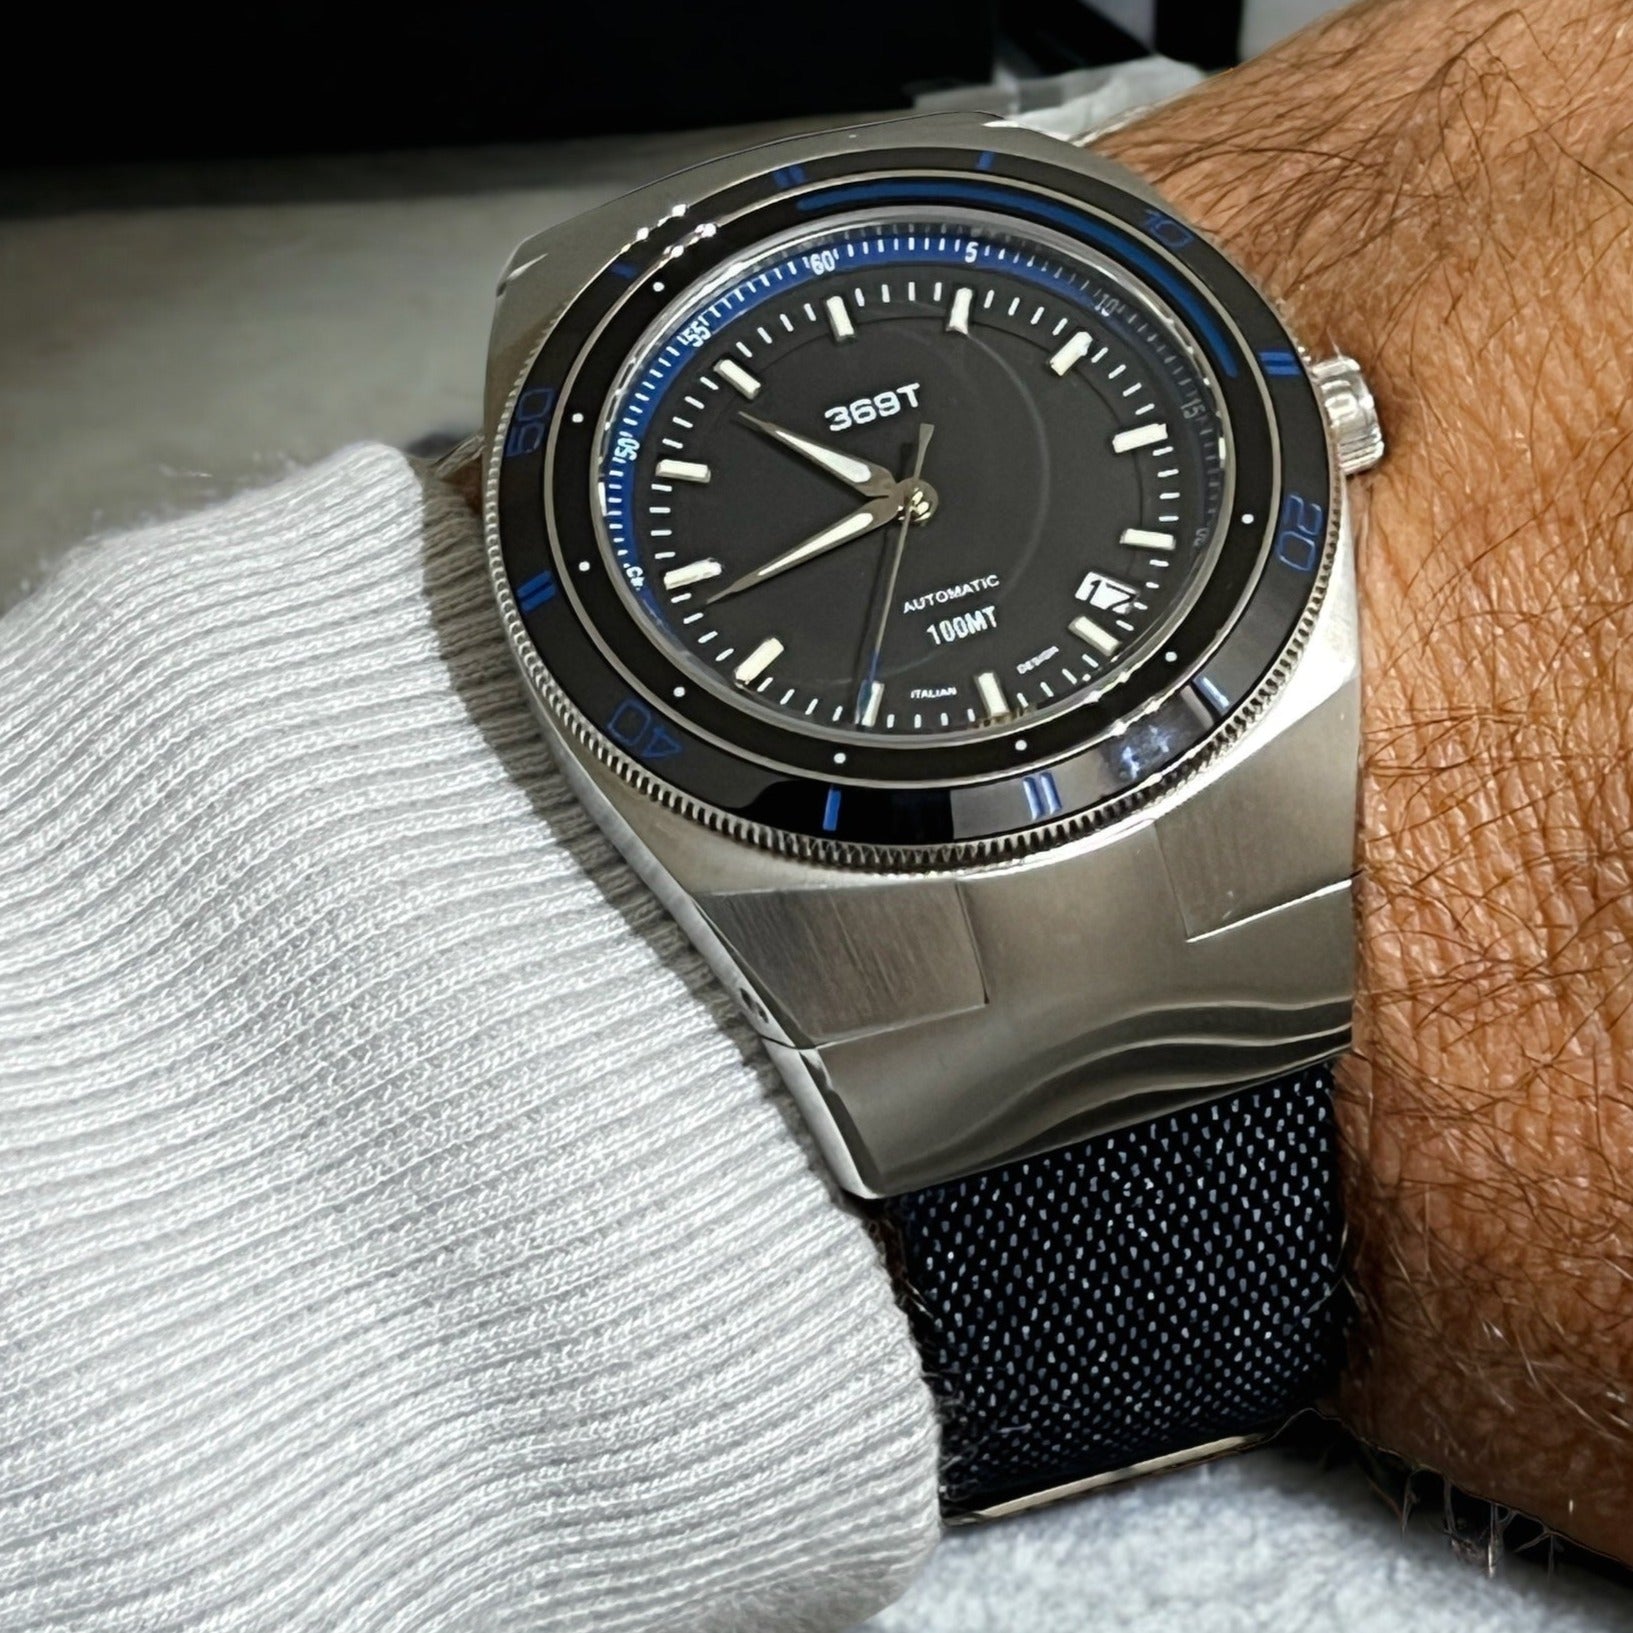 Beautiful Blue Canvas strap on the Blue Bezel Watch